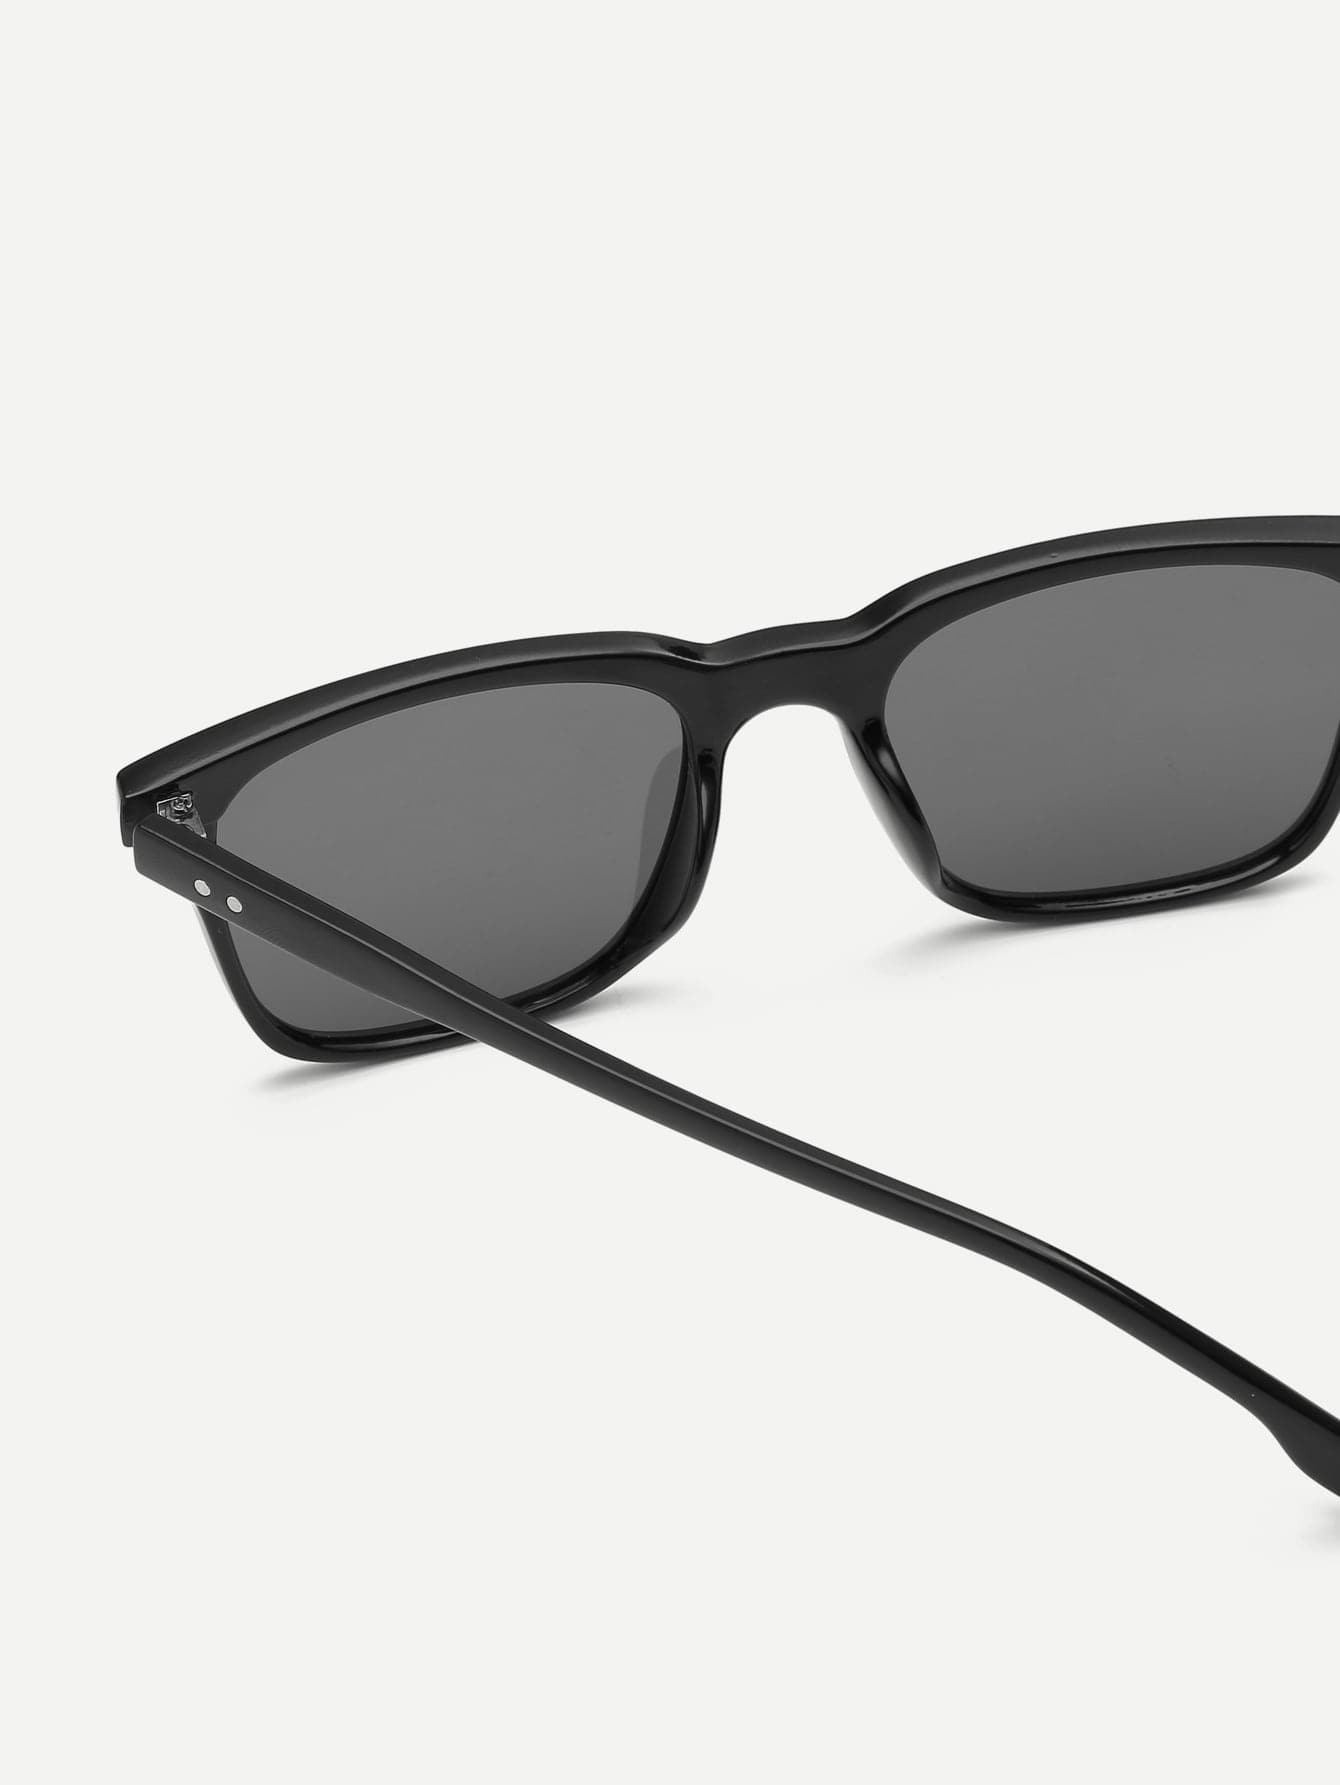 Black Retro Plain Frame Flat Lens Sunglasses